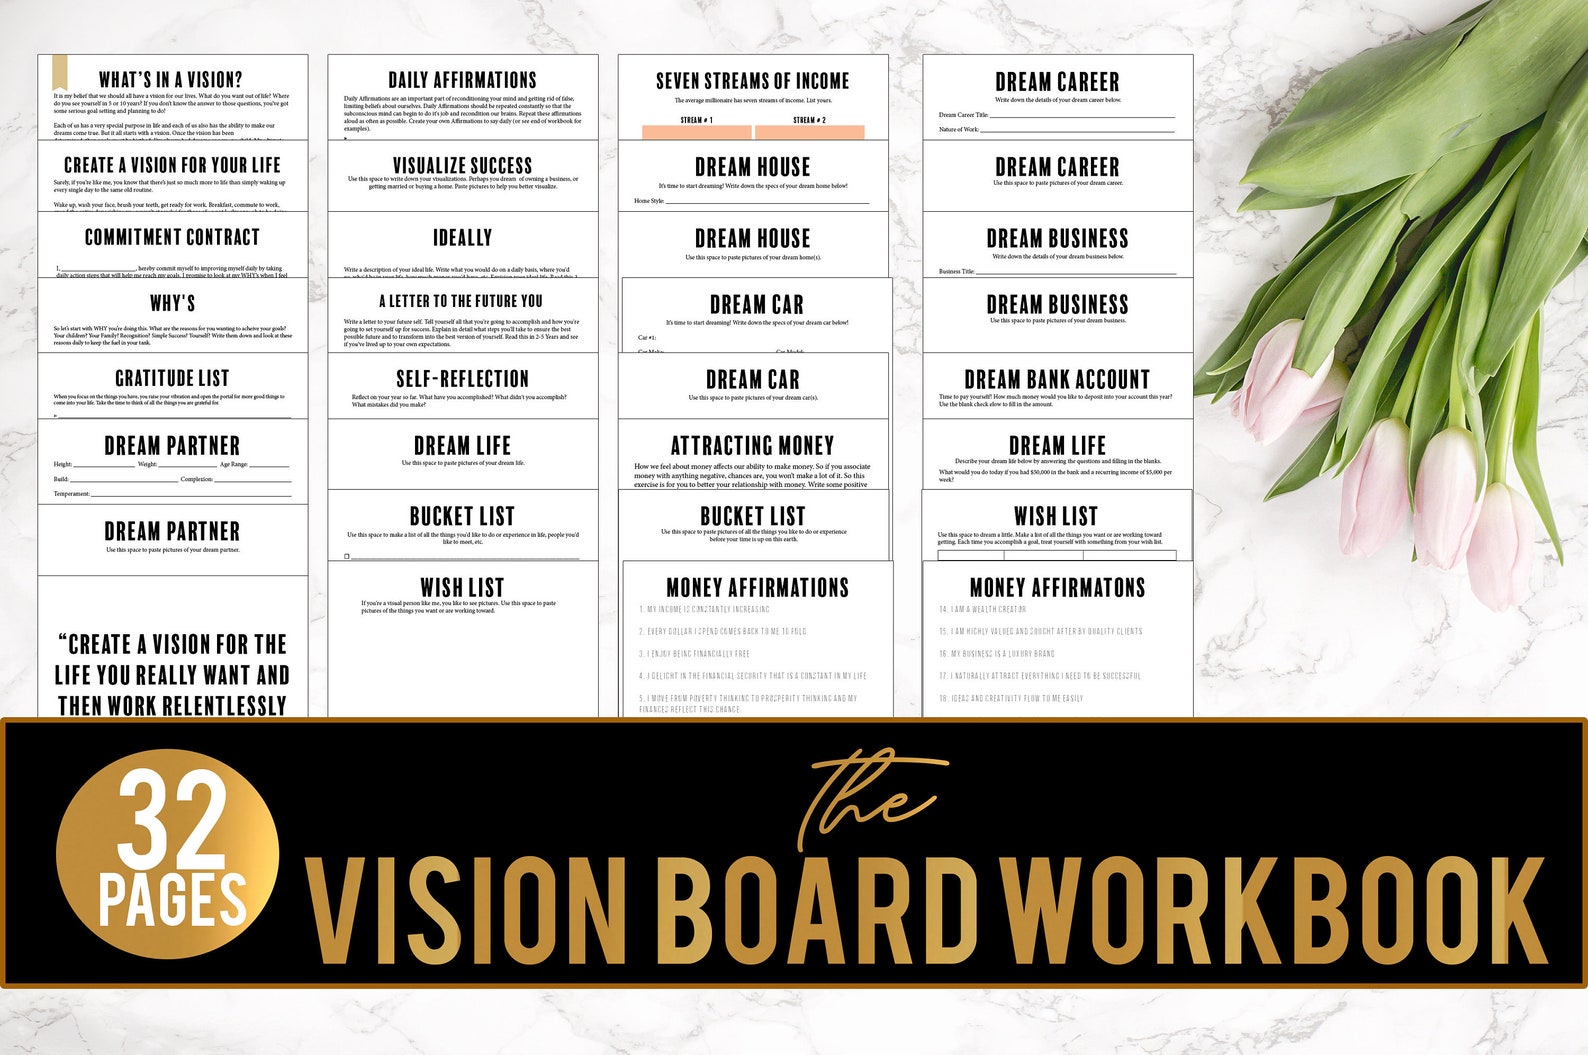 Book for Vision Board. Vision Board pic.